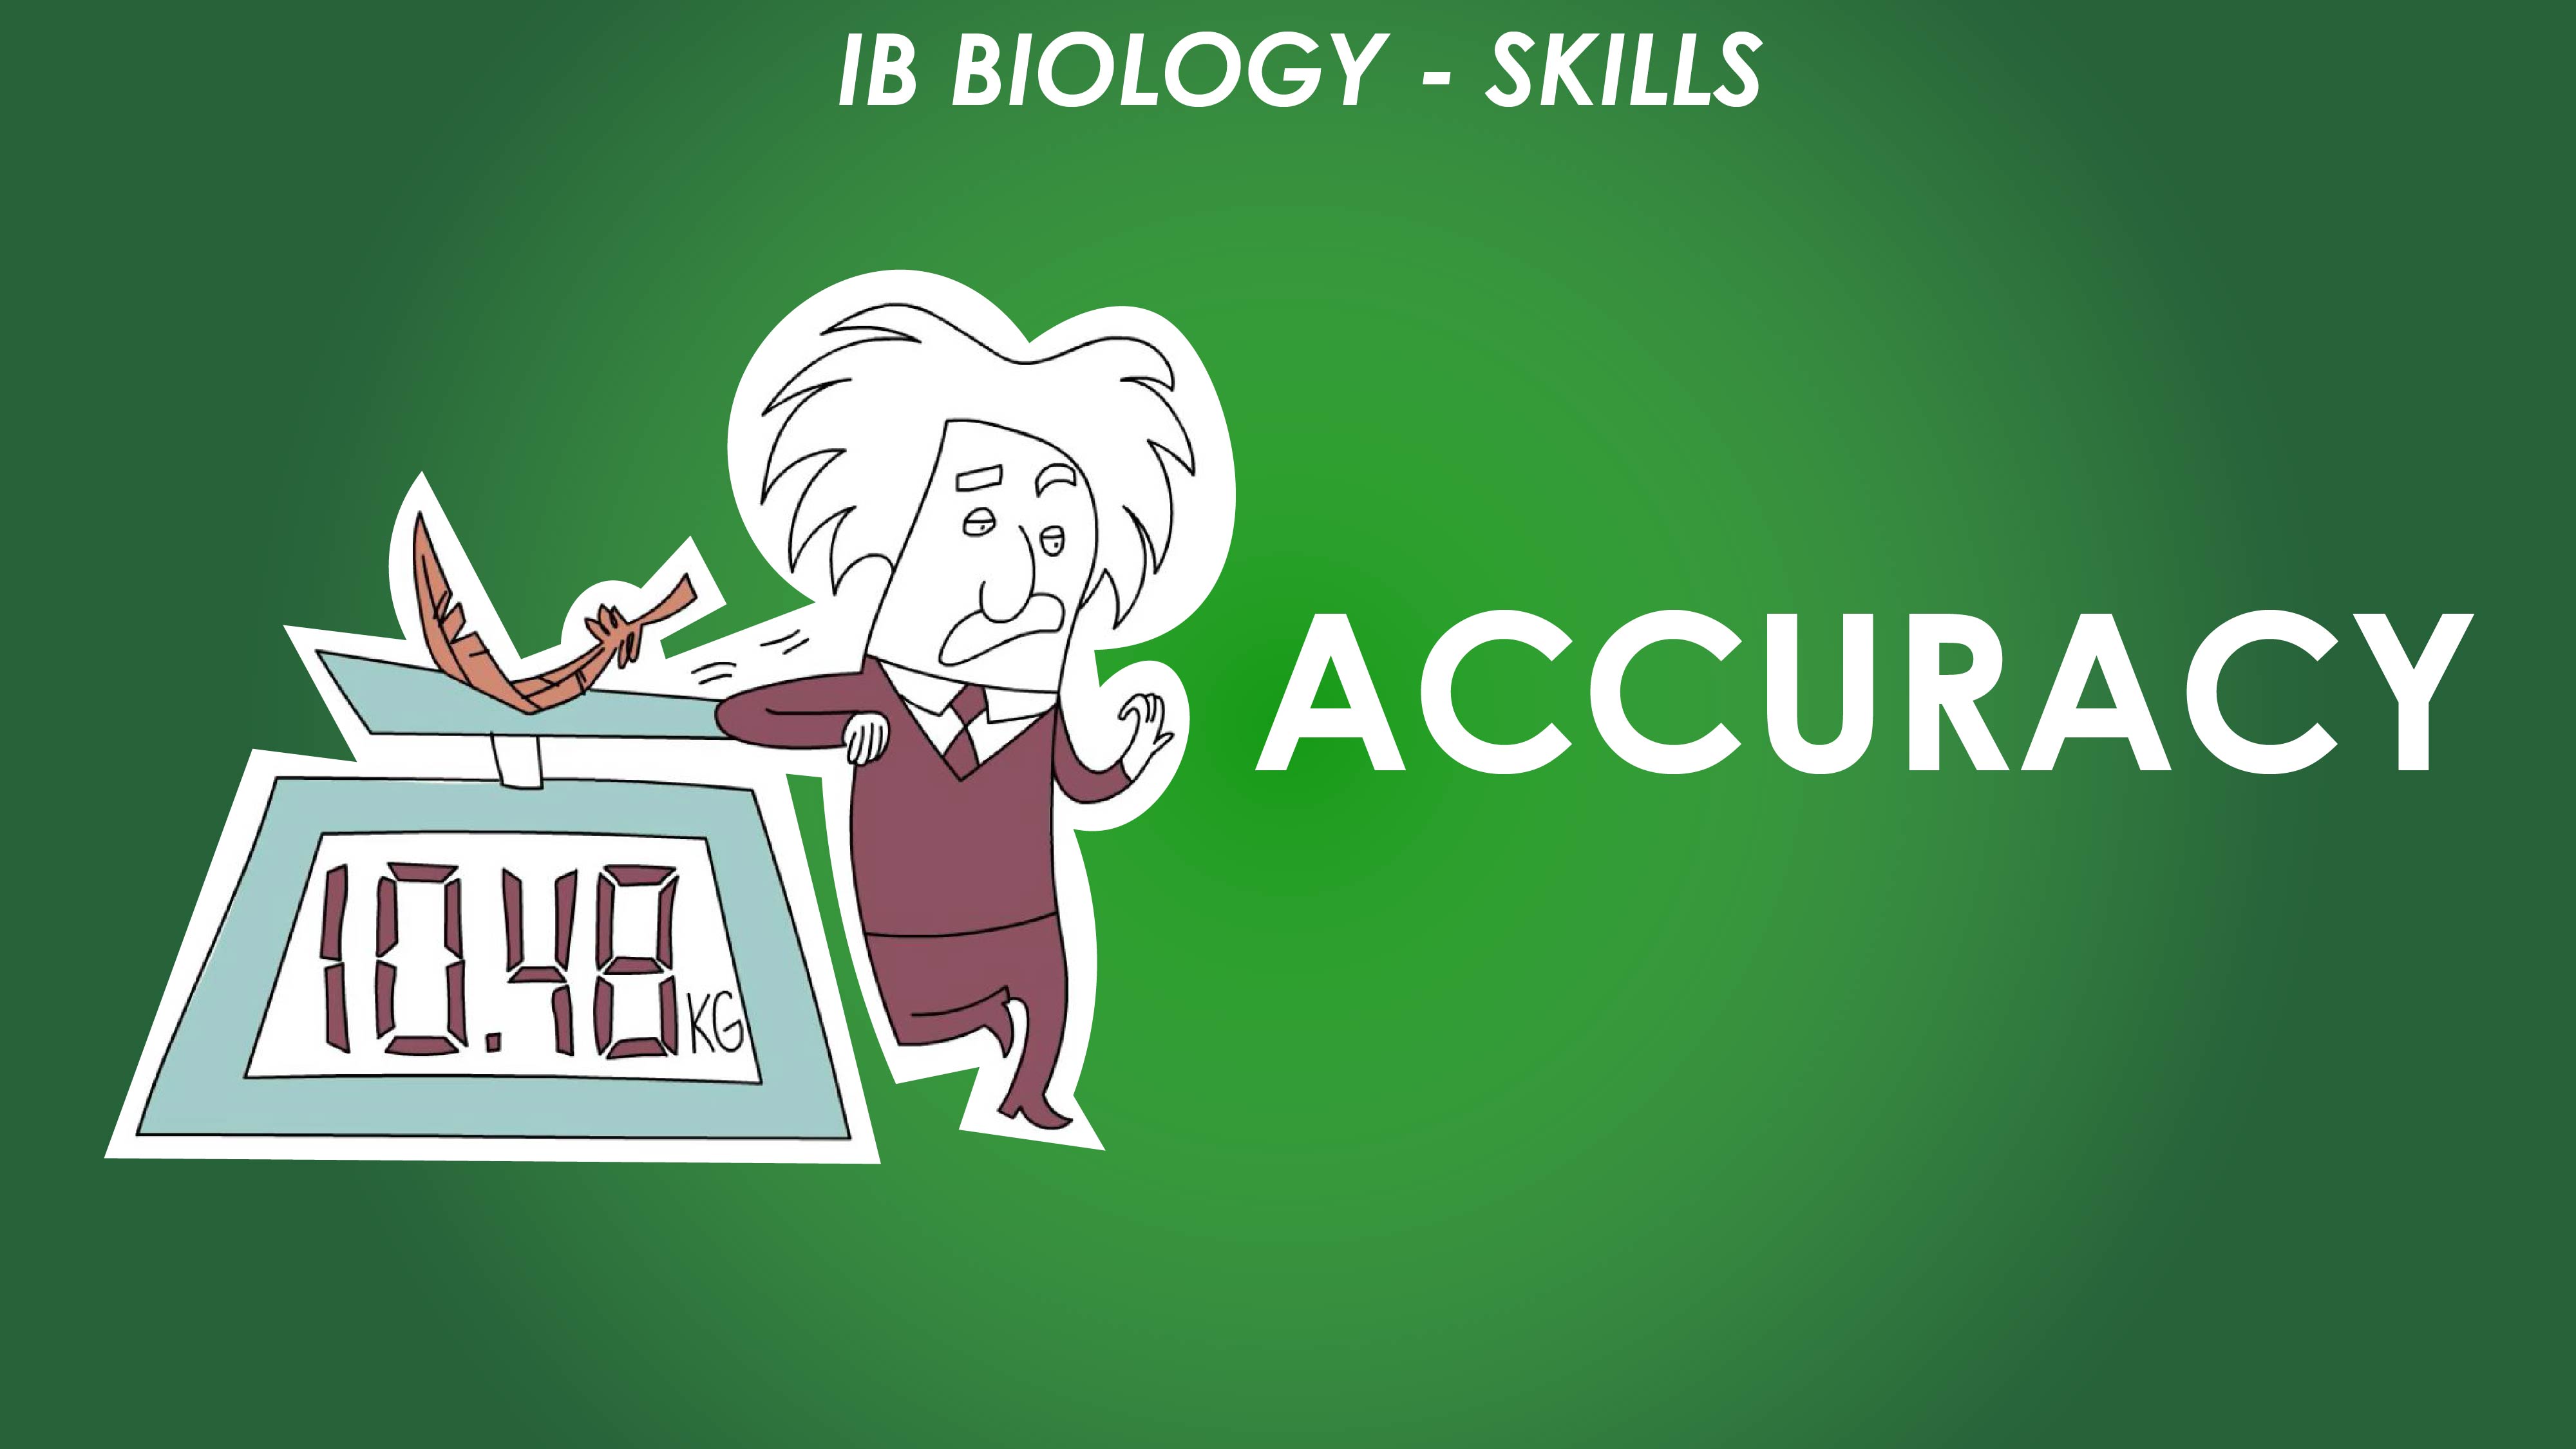 Accuracy - IB Biology Skills 